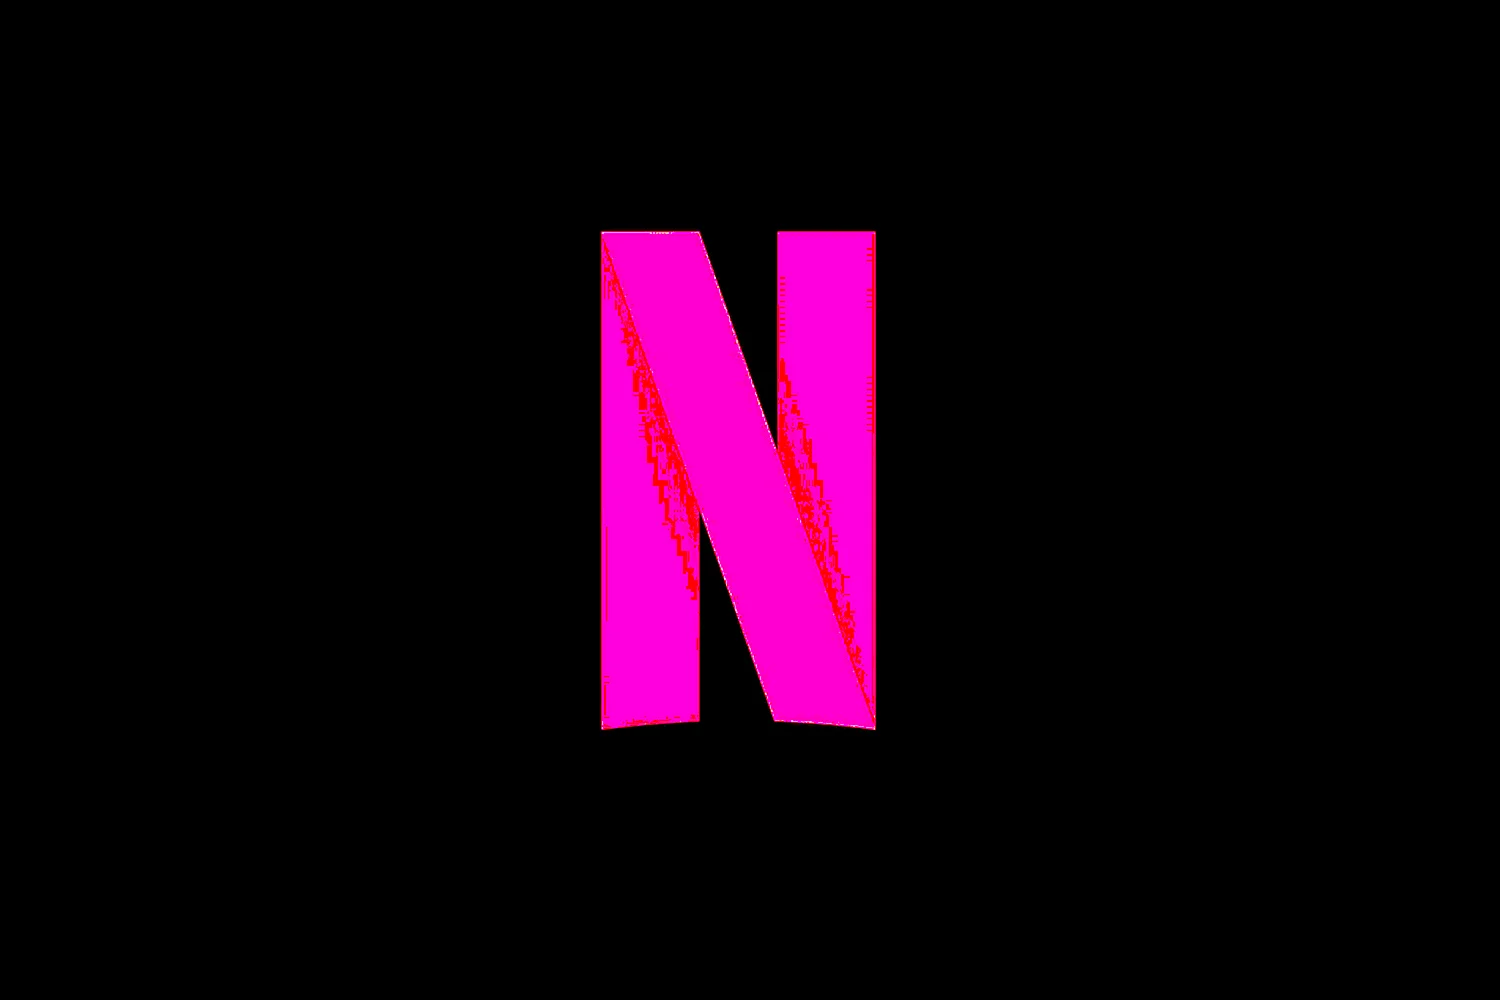 Netflix логотип